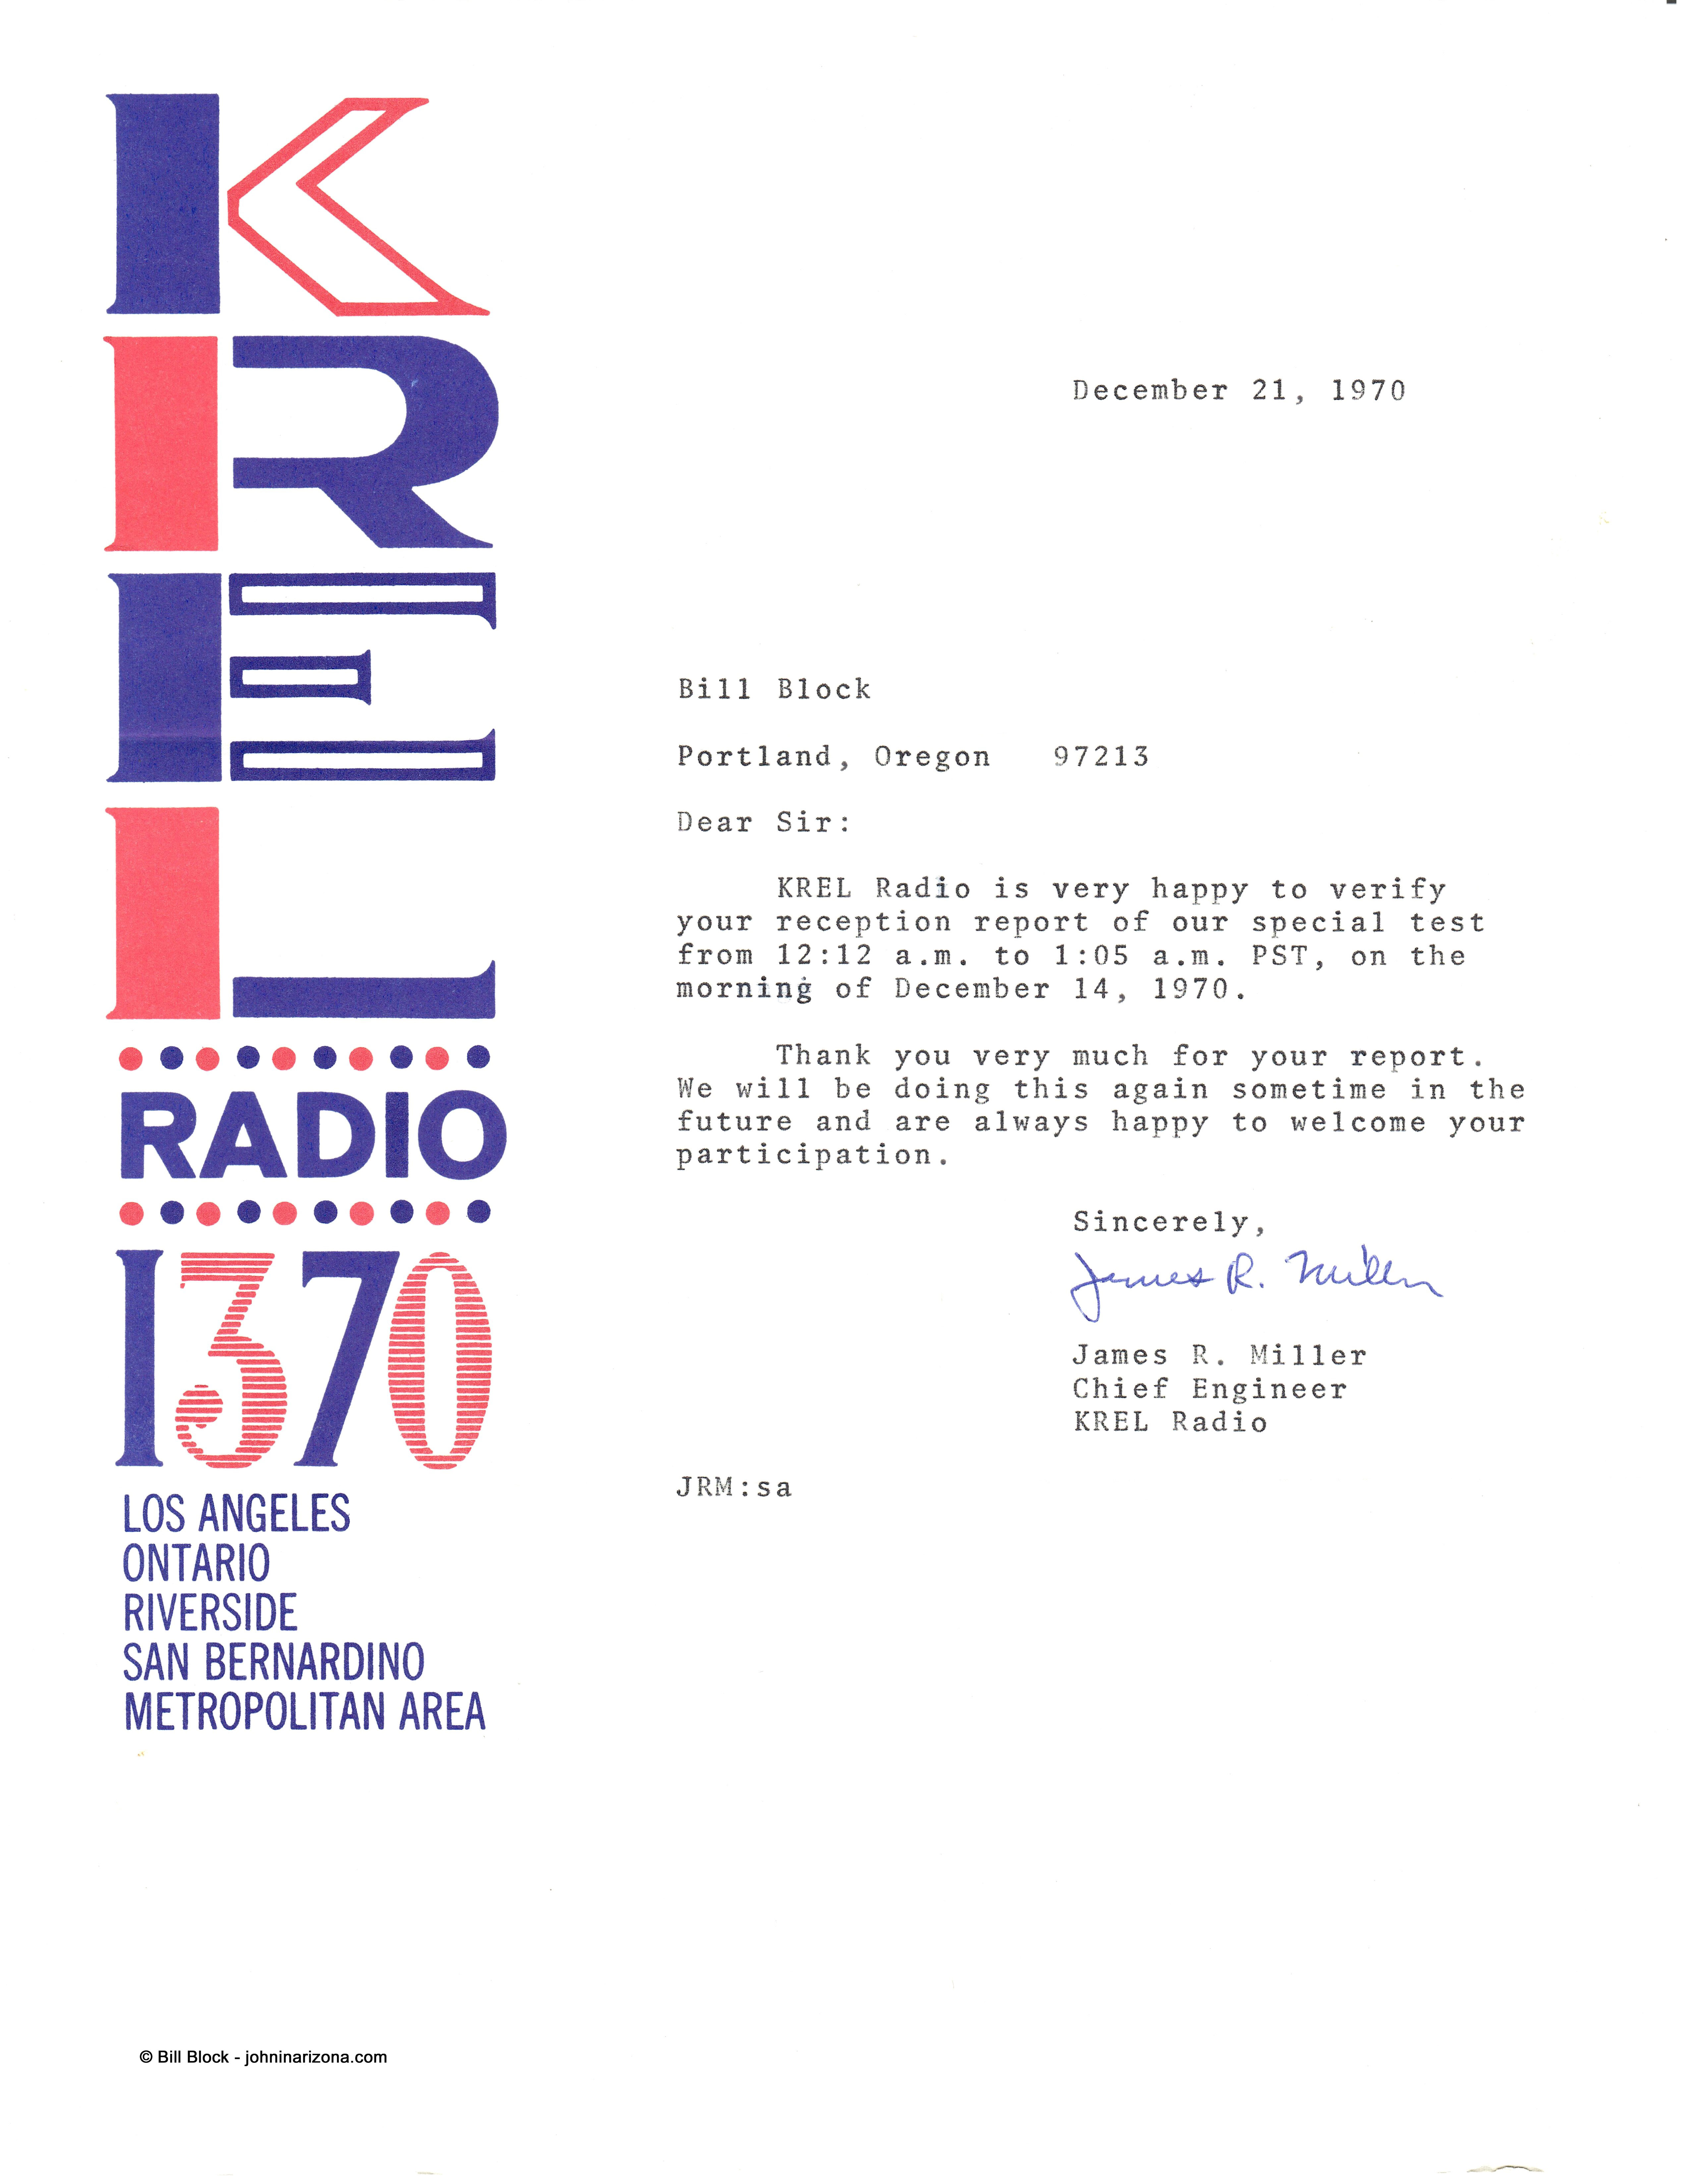 KREL Radio 1370 Corona, California